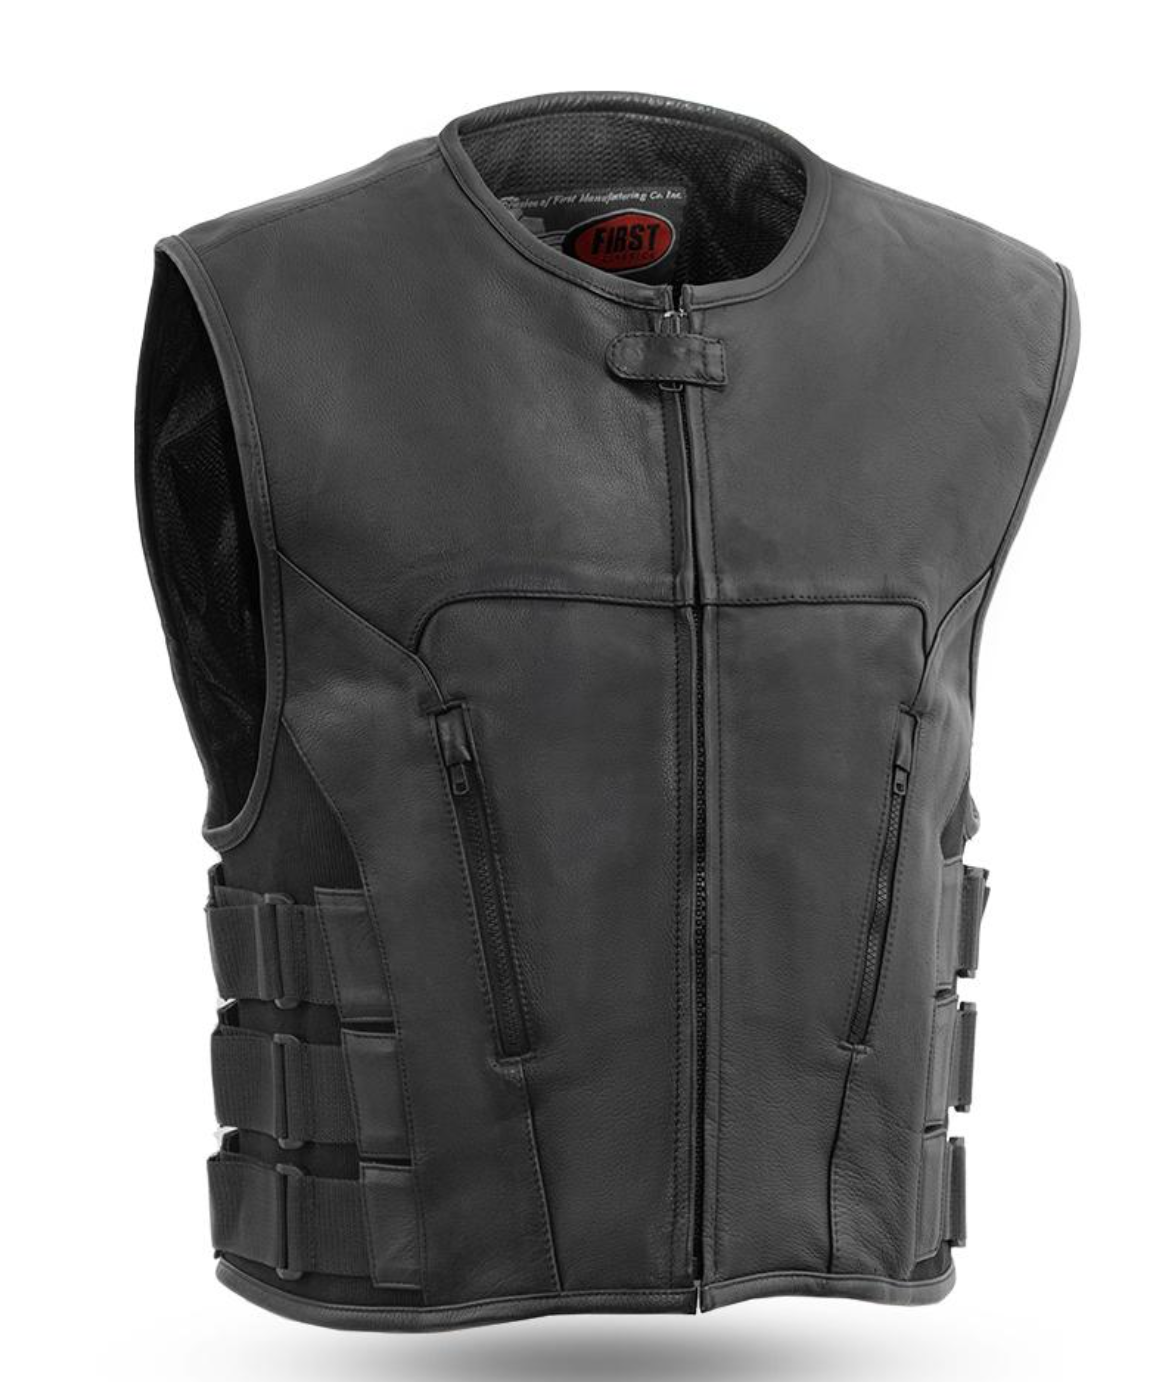 Commando Swat Style Leather Club Vest - $90.00 : BQ Sports.com, : made ...